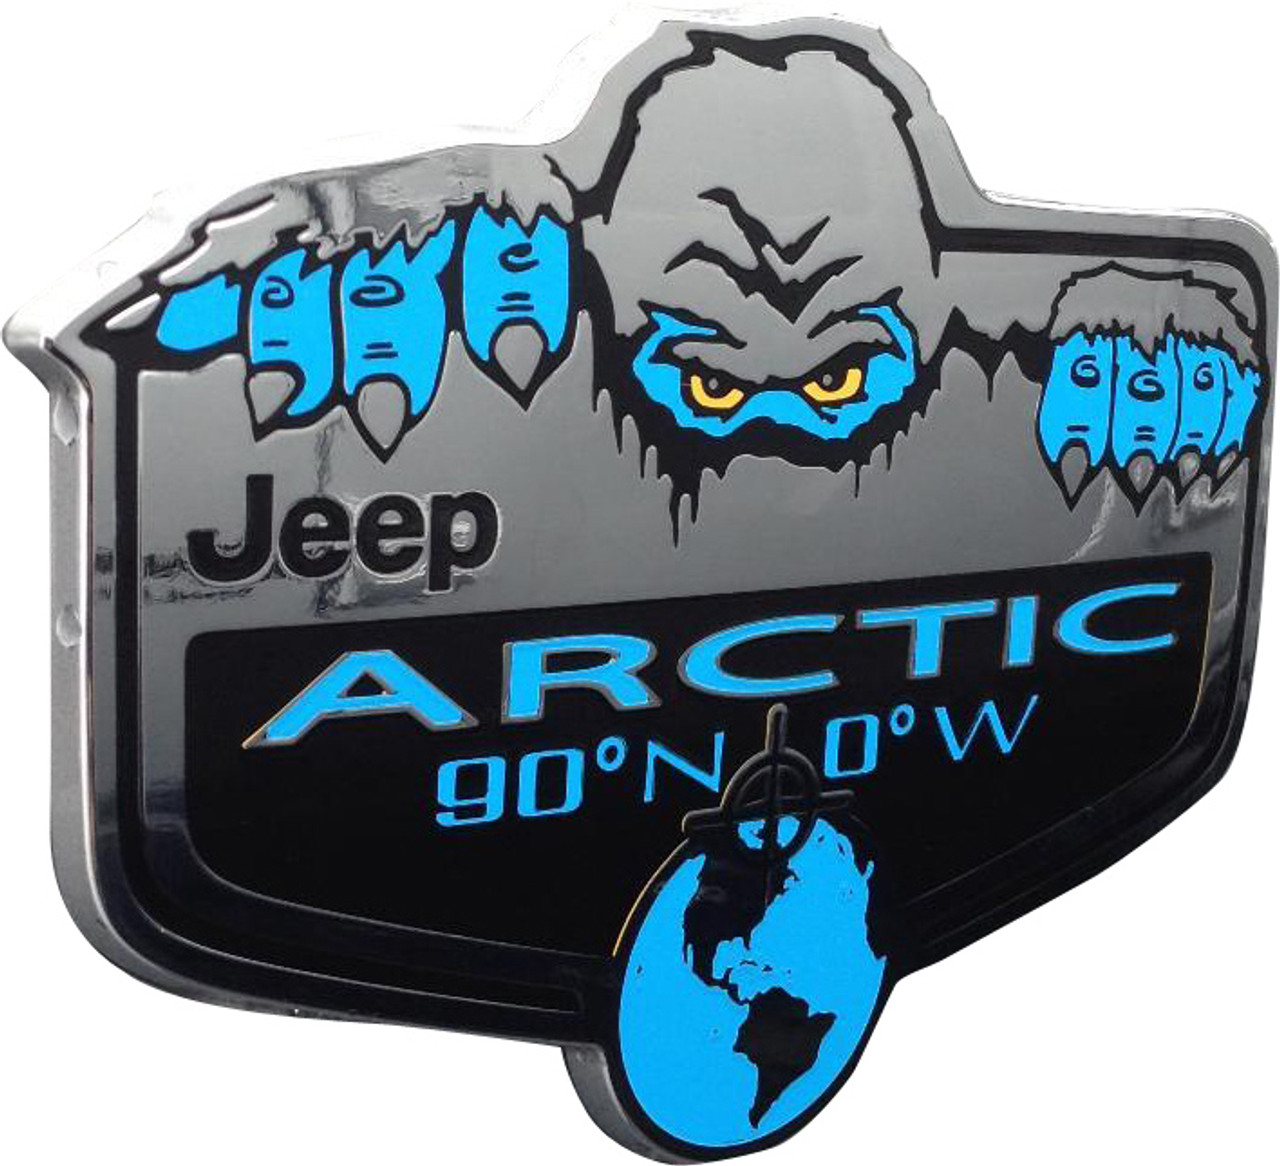 Jeep Wrangler Arctic Edition fender badge, A yeti peeking o…